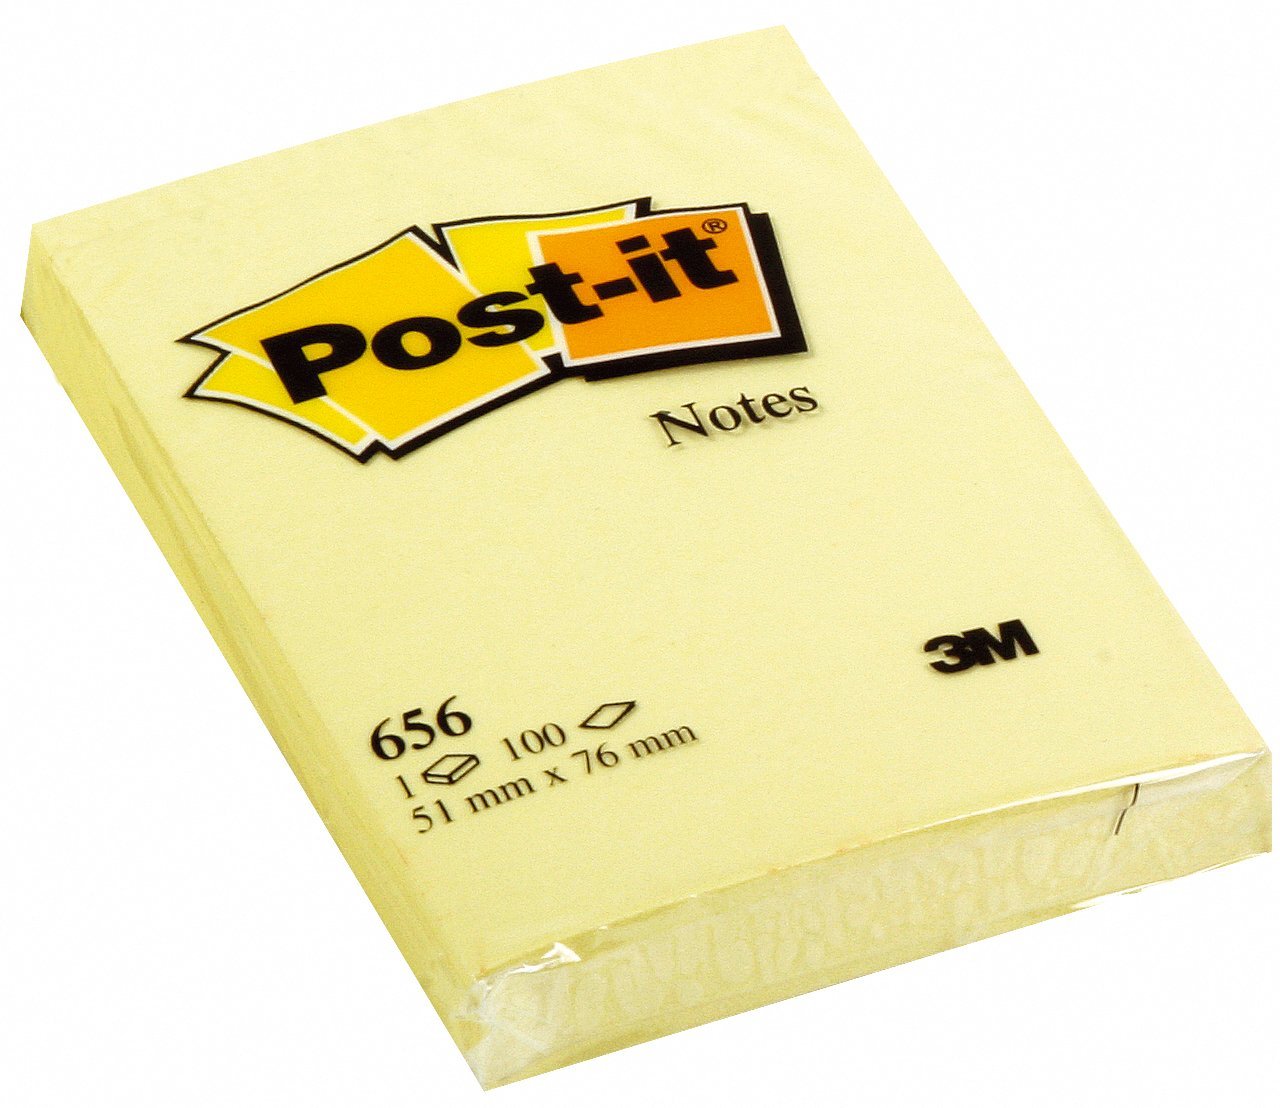 Post-it notes 51 mm gul 100 ark